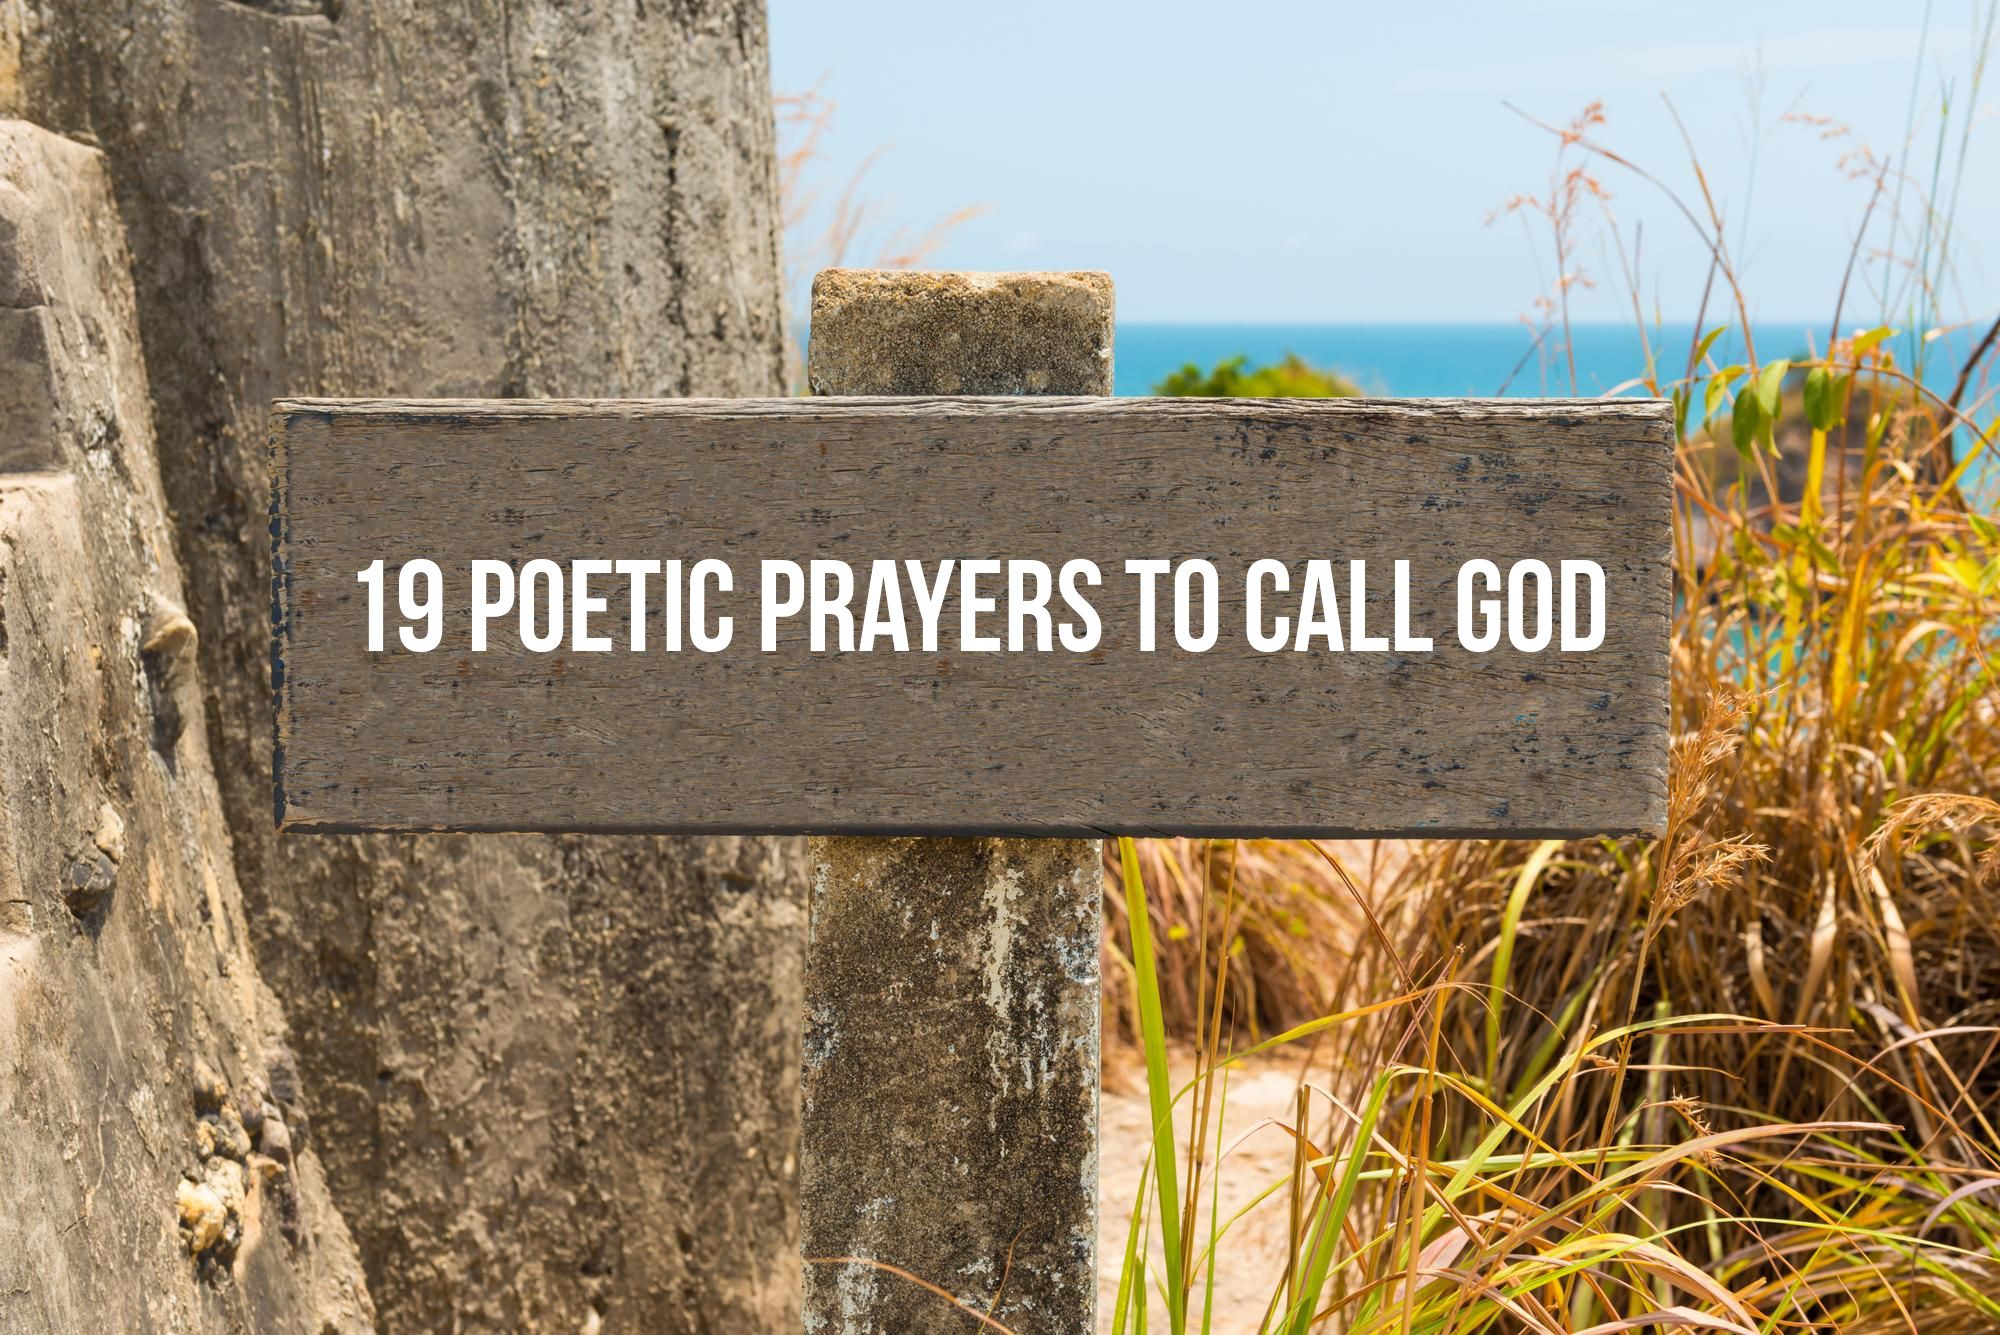 19 Poetic Prayers to call god